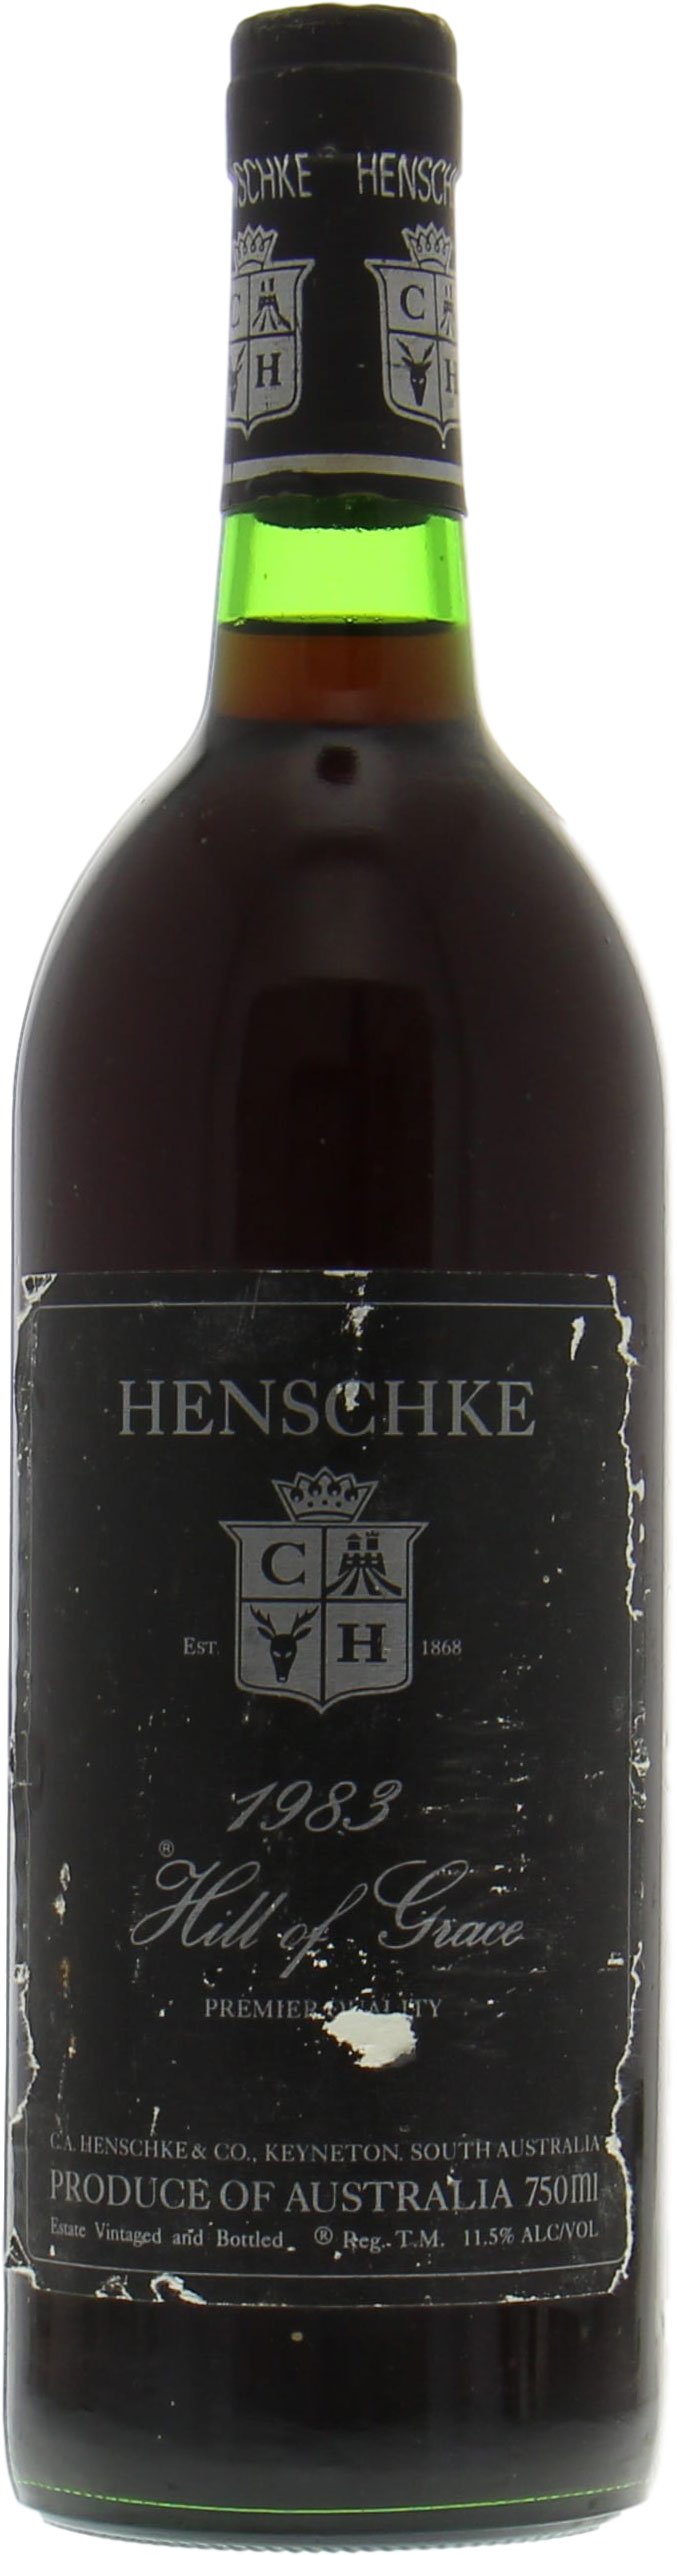 Henschke - Hill Of Grace 1983 Perfect